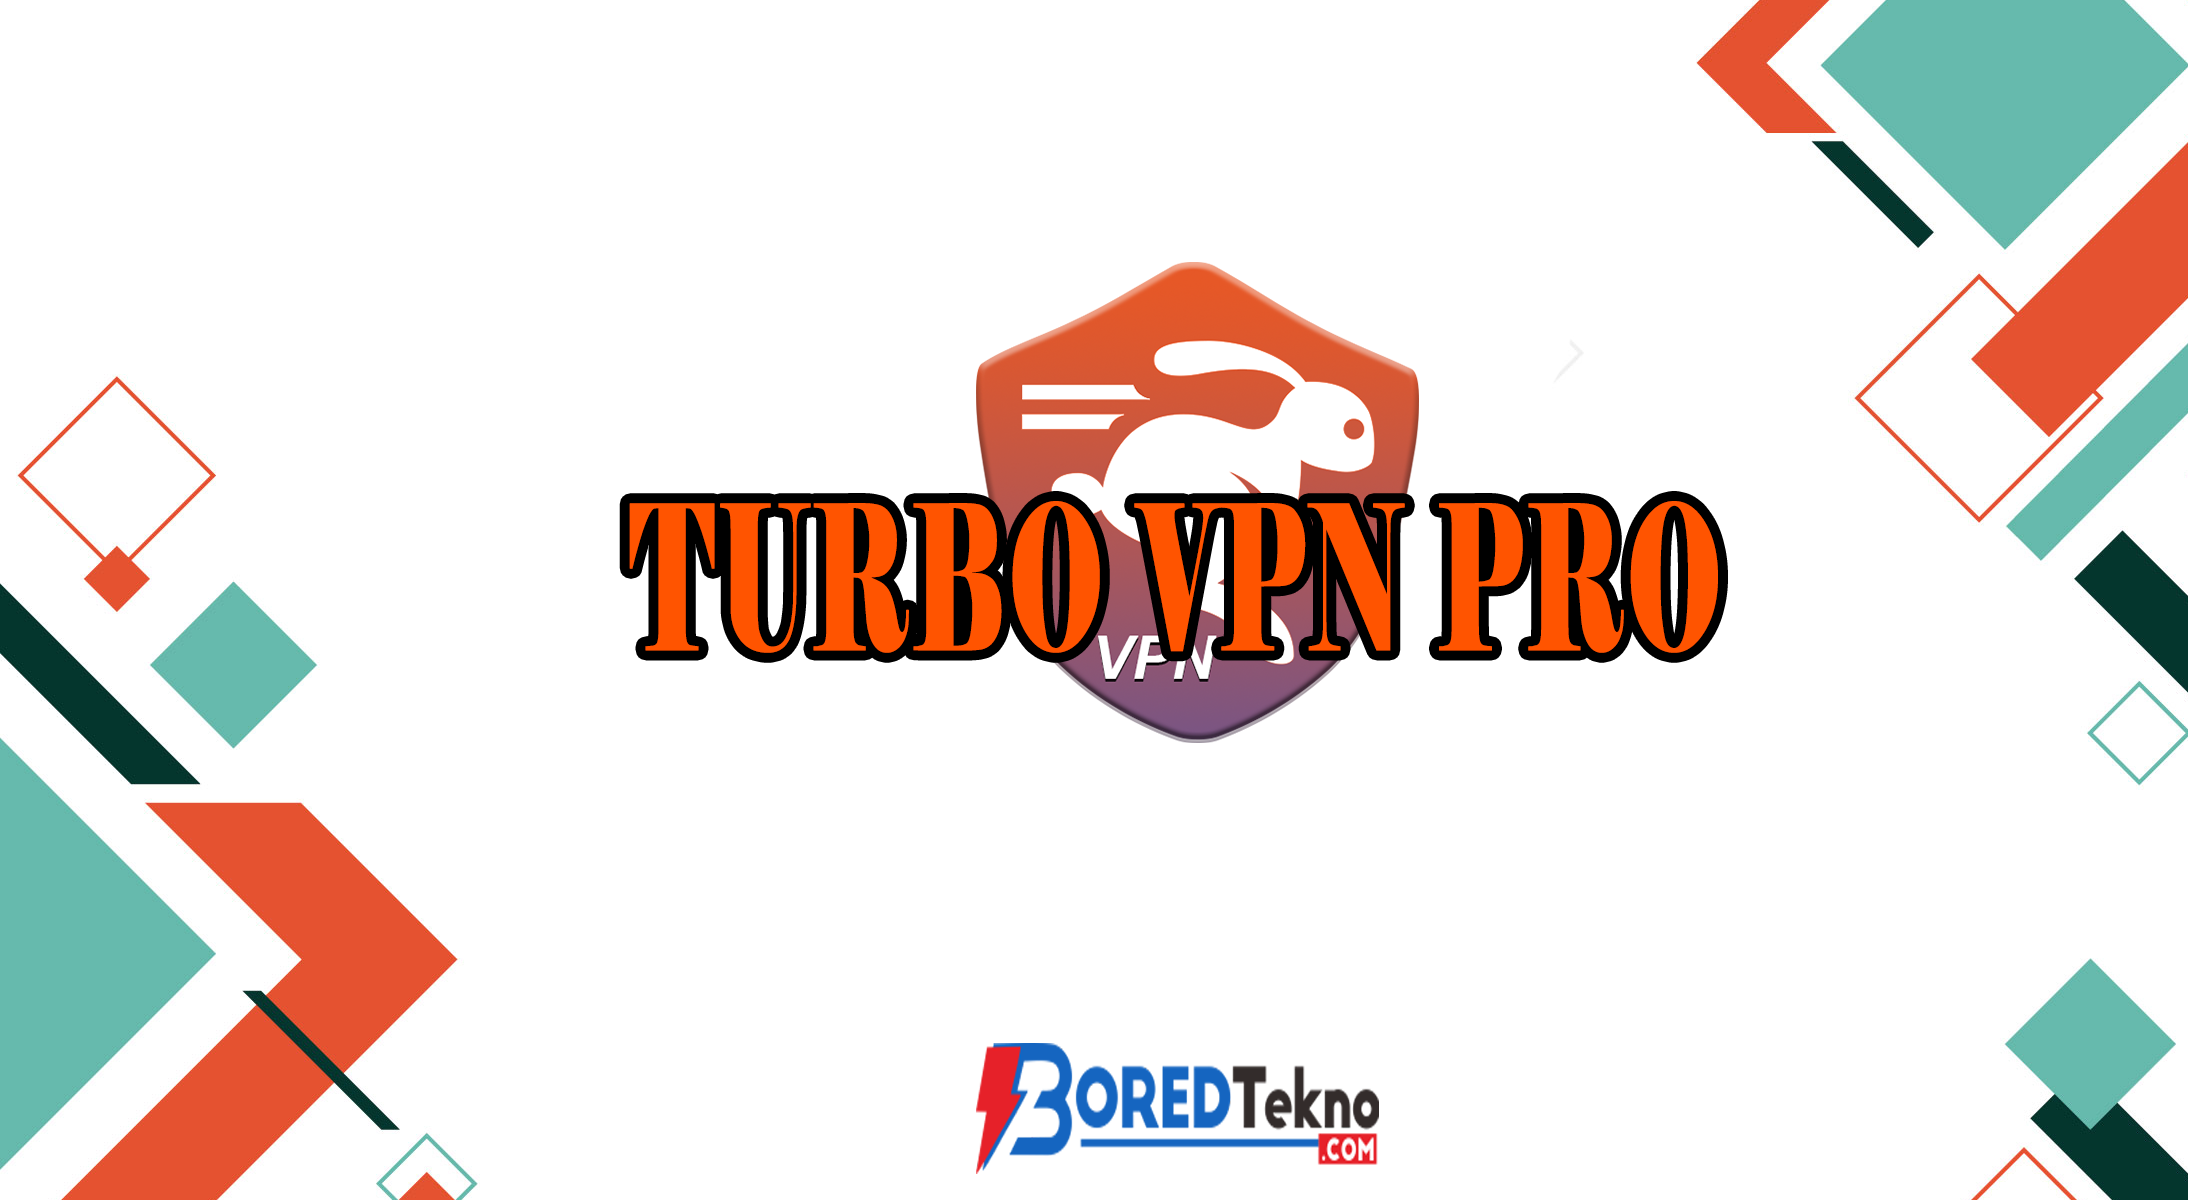 Turbo VPN Pro